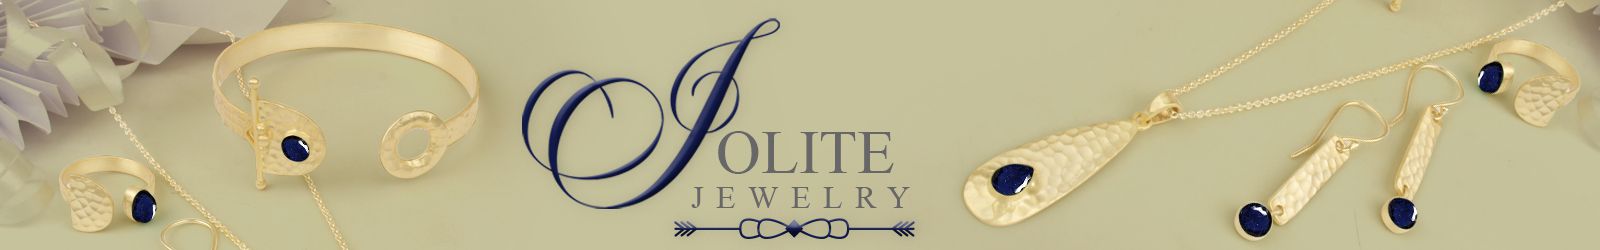 Silver Iolite Jewelry Wholesale Supplier